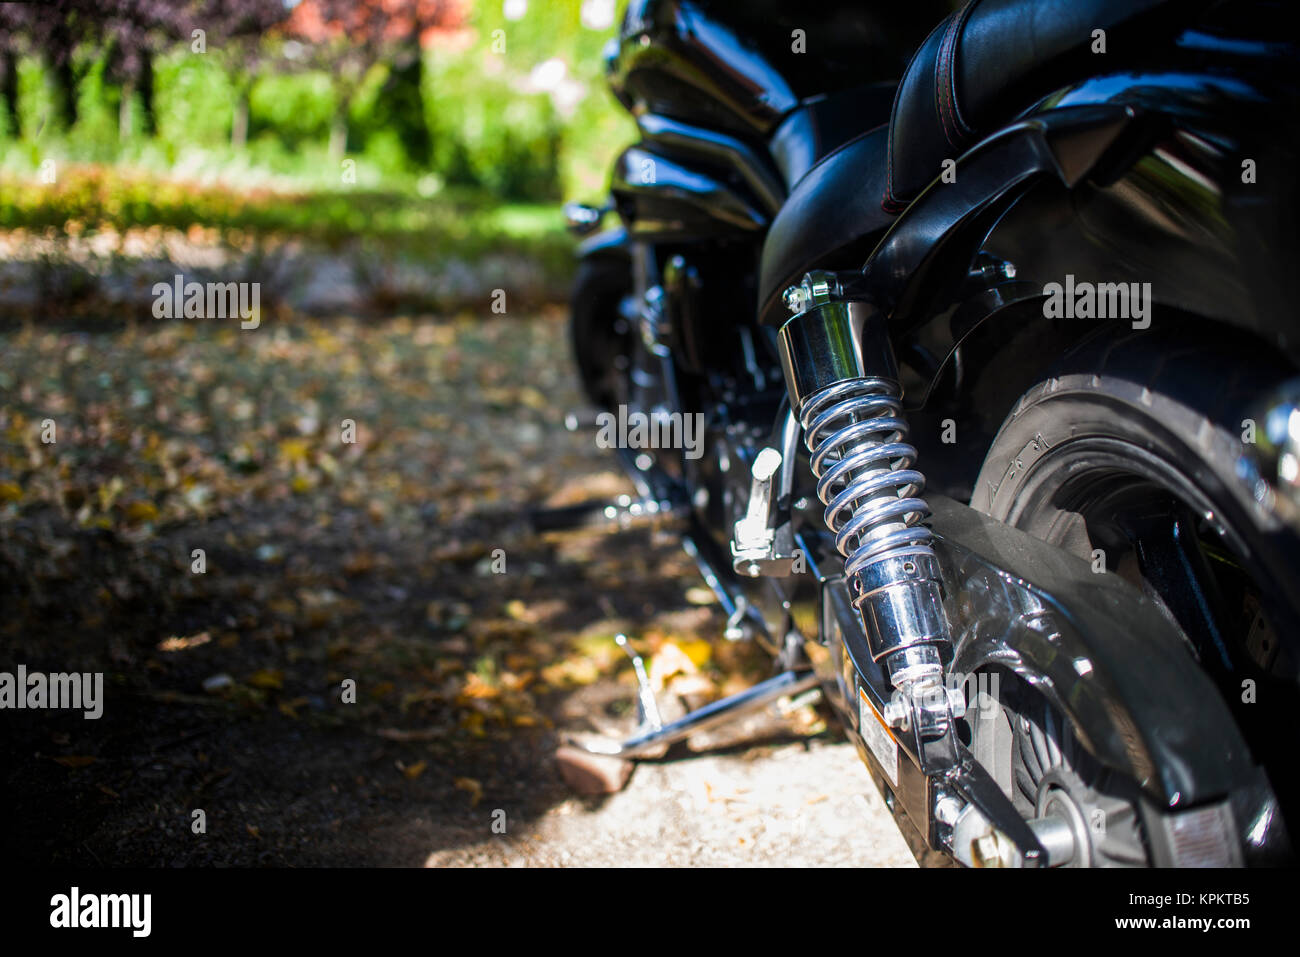 Shock absorbers motorrad -Fotos und -Bildmaterial in hoher Auflösung – Alamy